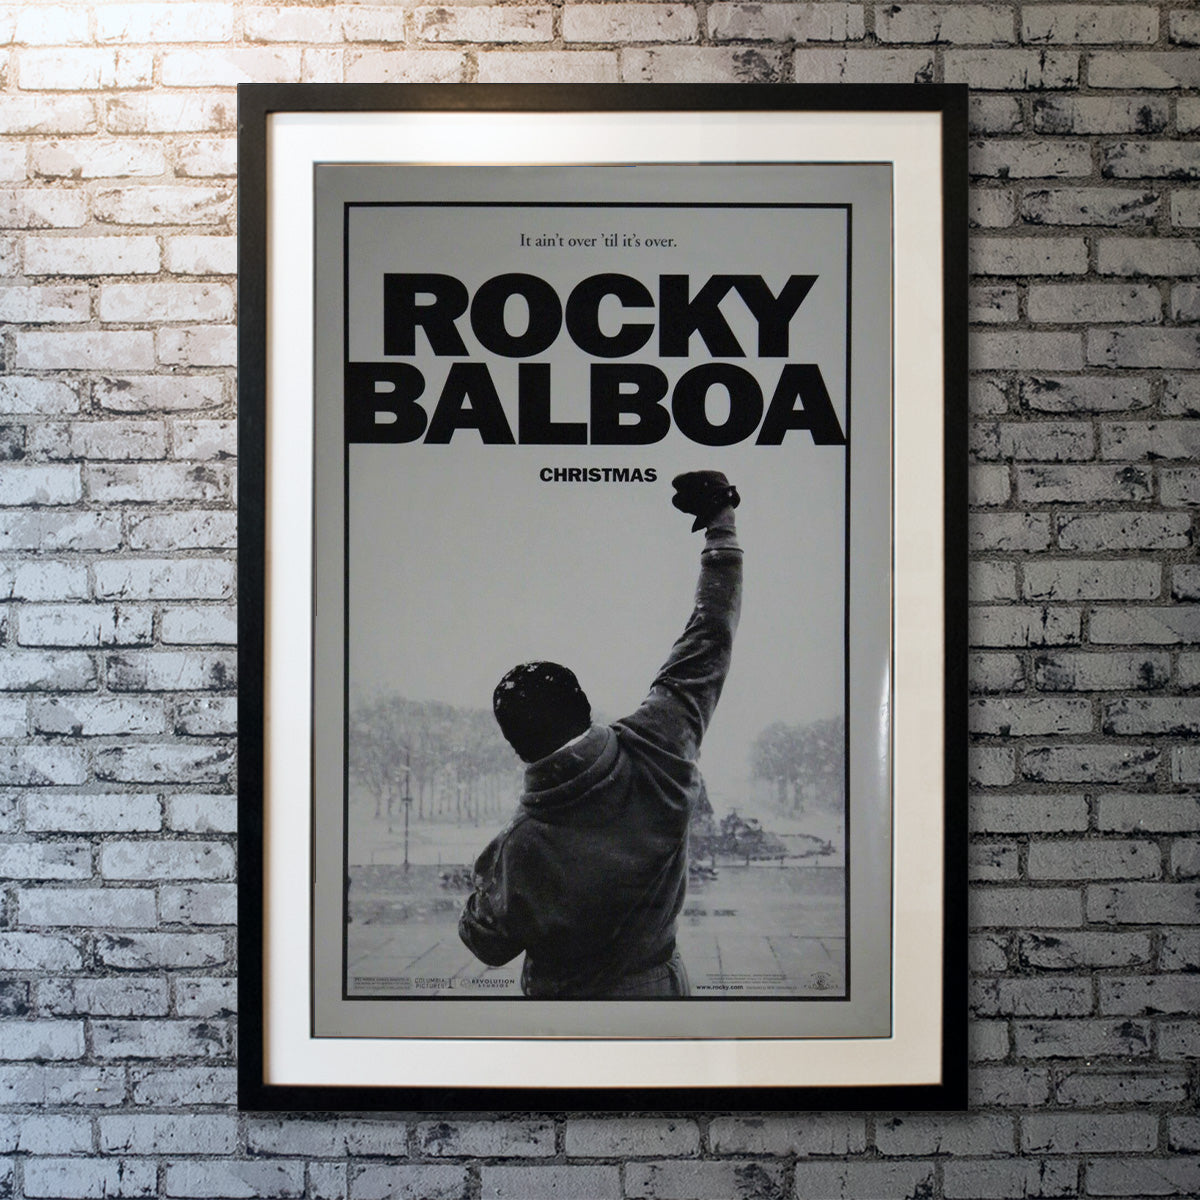 Original Movie Poster of Rocky Balboa (2006)